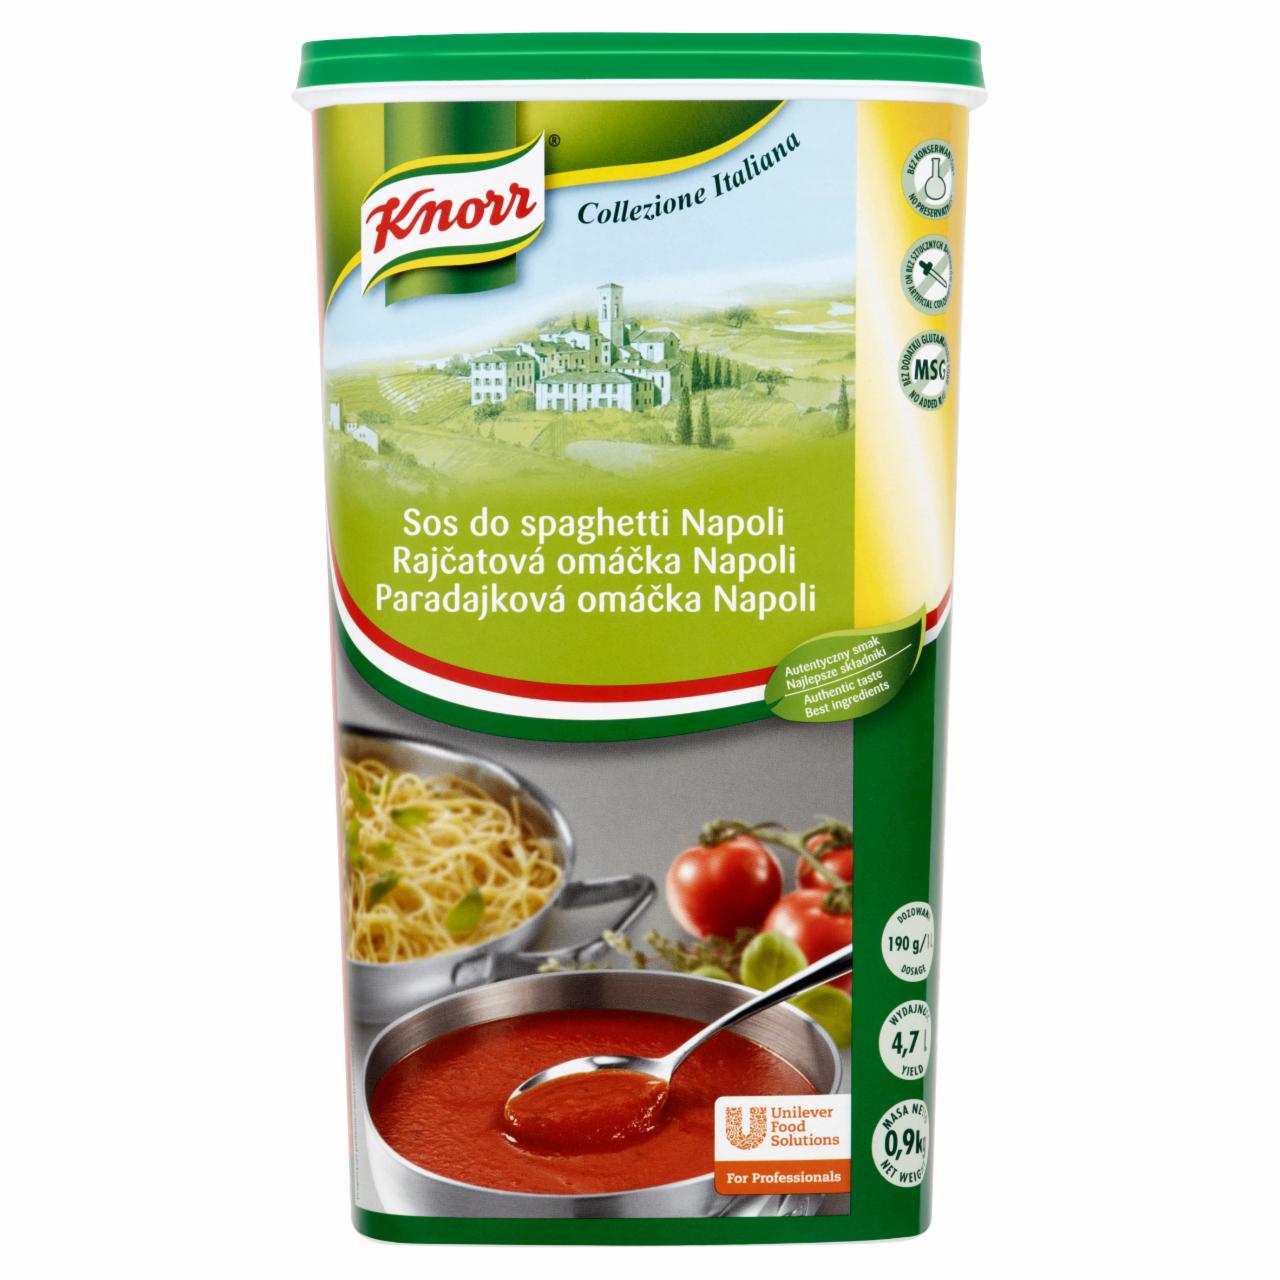 Zdjęcia - Knorr Sos do spaghetti Napoli 0,9 kg